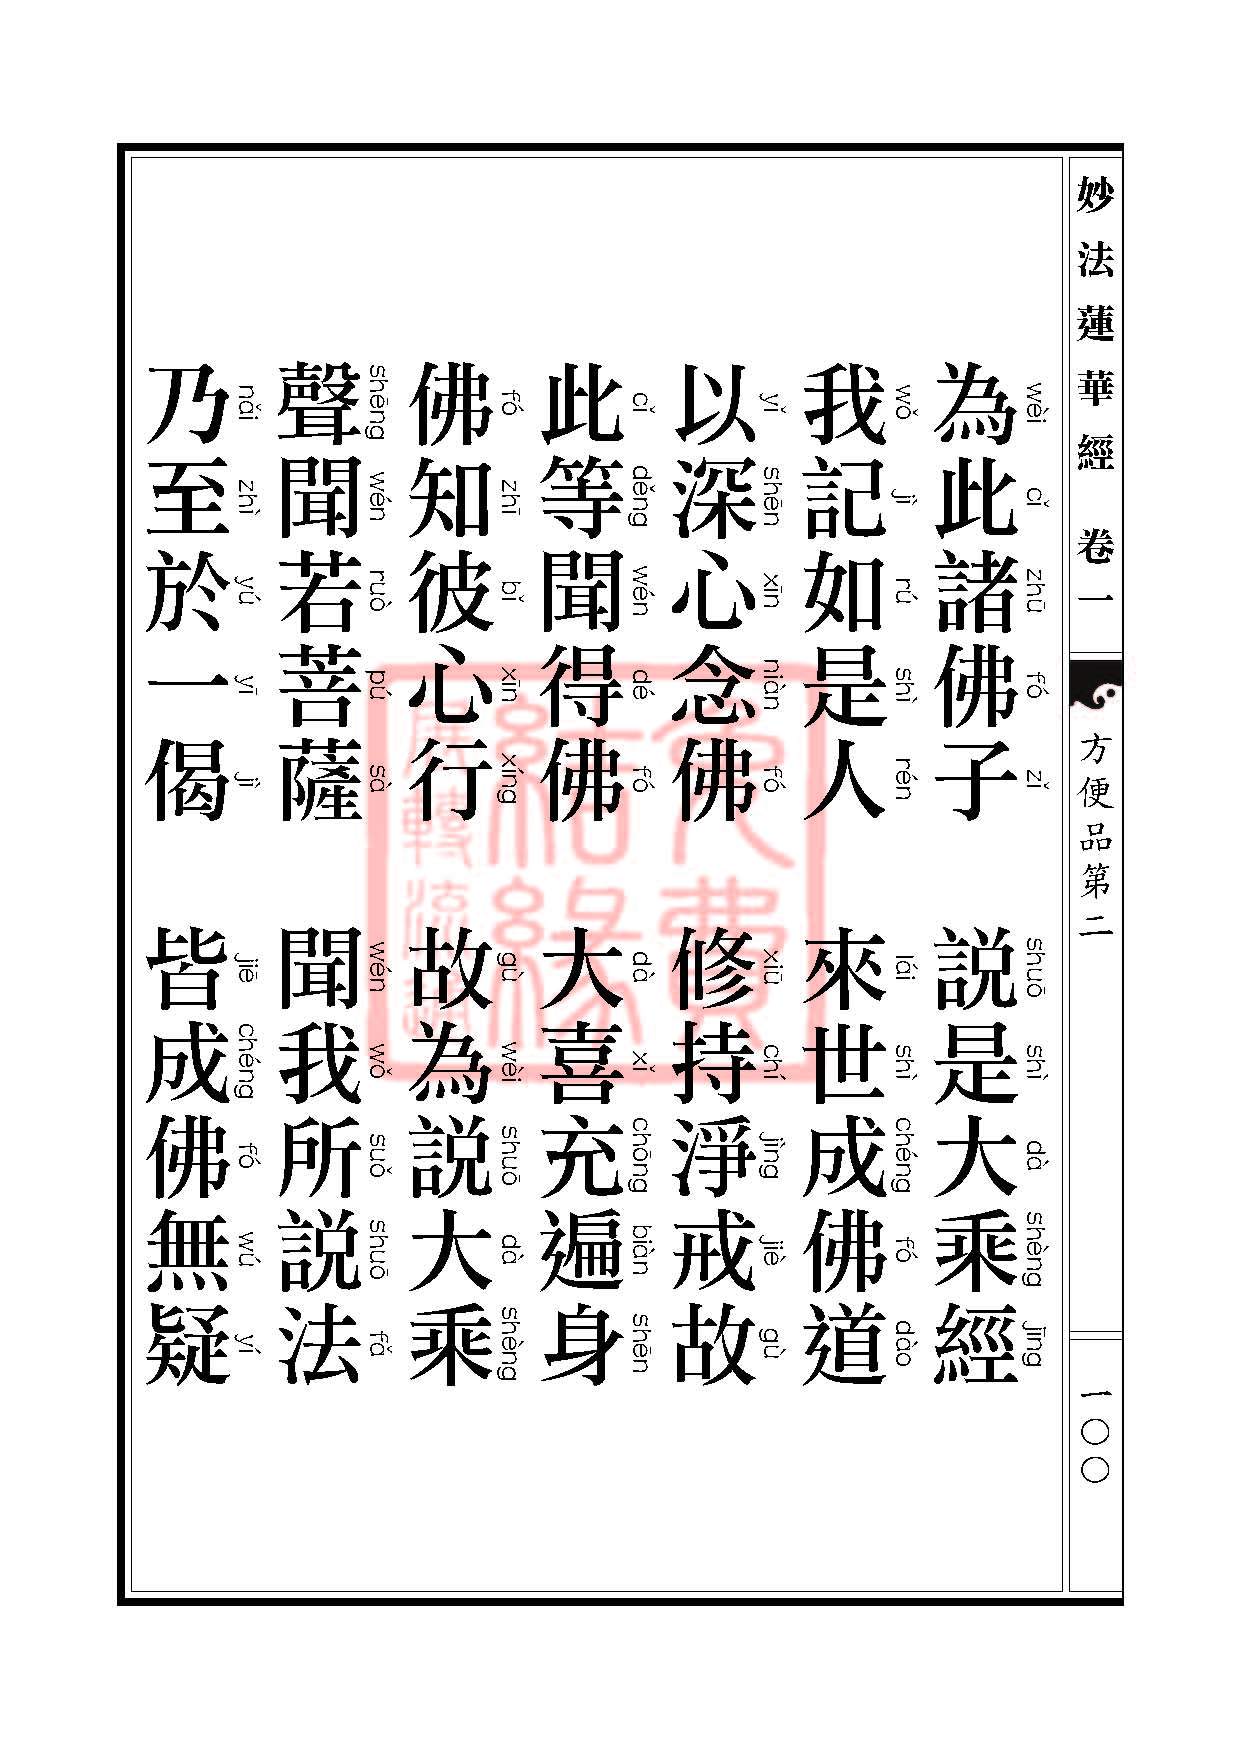 Book_FHJ_HK-A6-PY_Web_页面_100.jpg